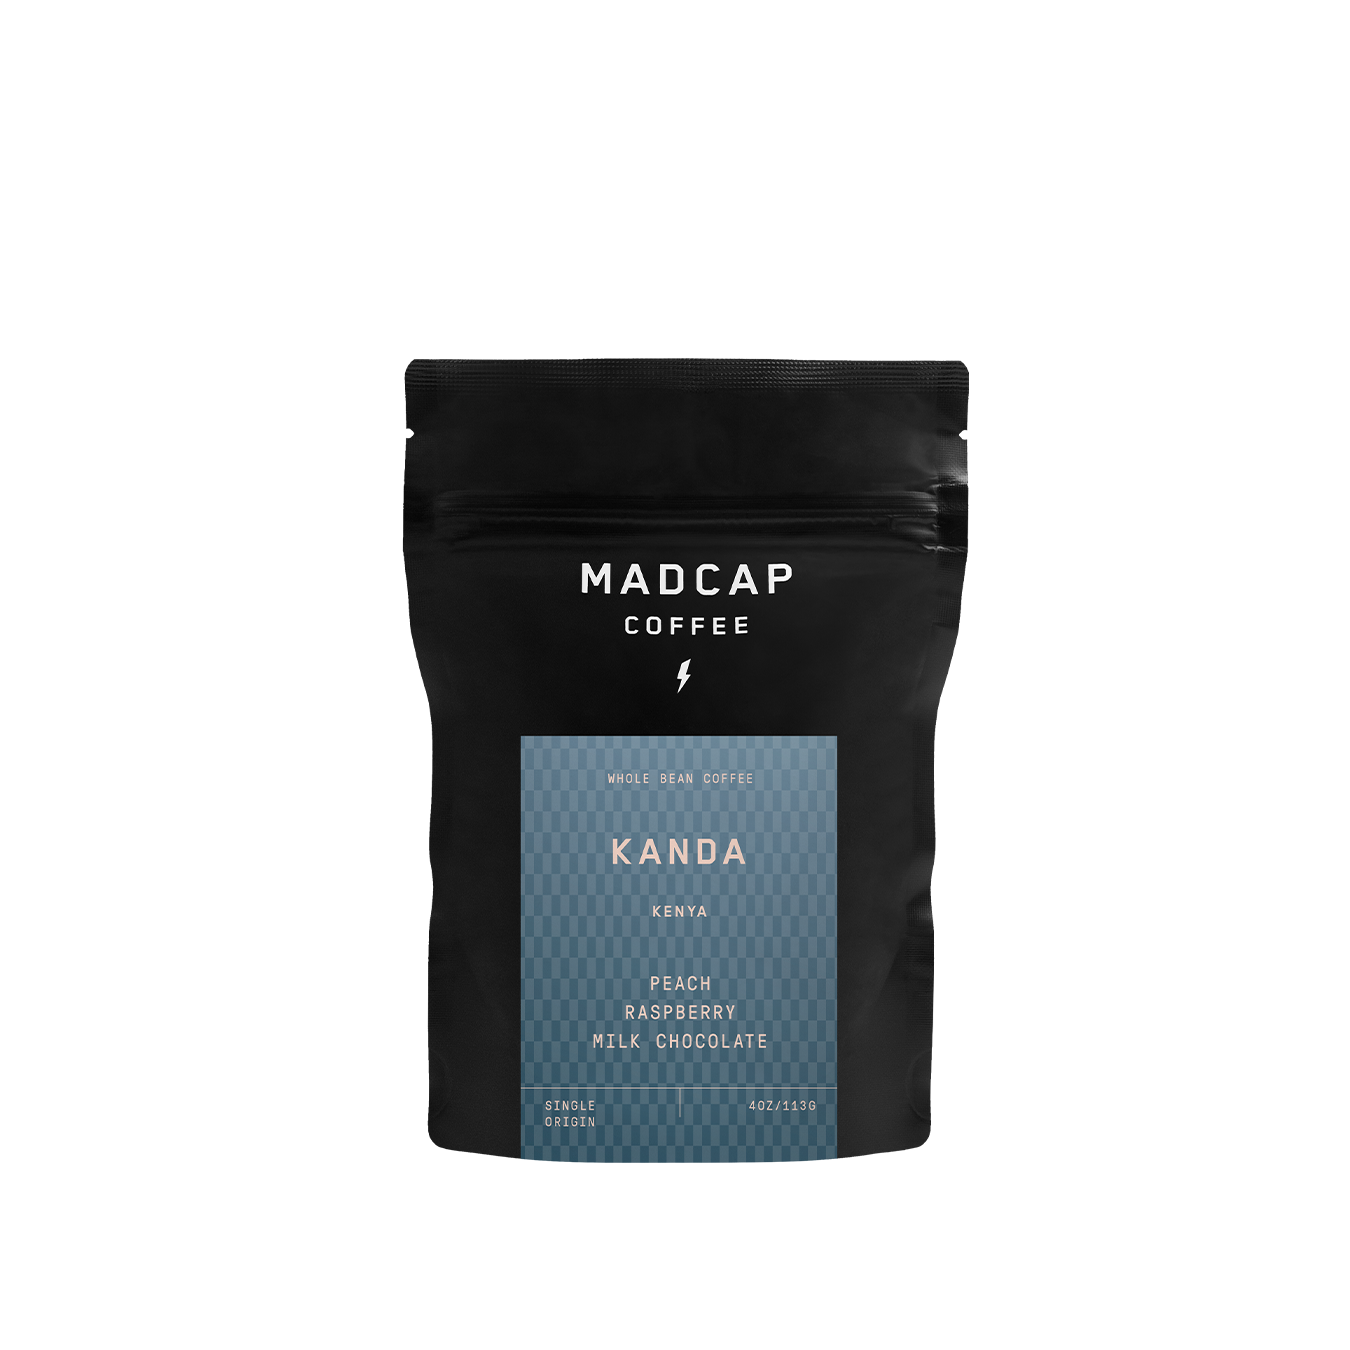 Sample of Kanda coffee